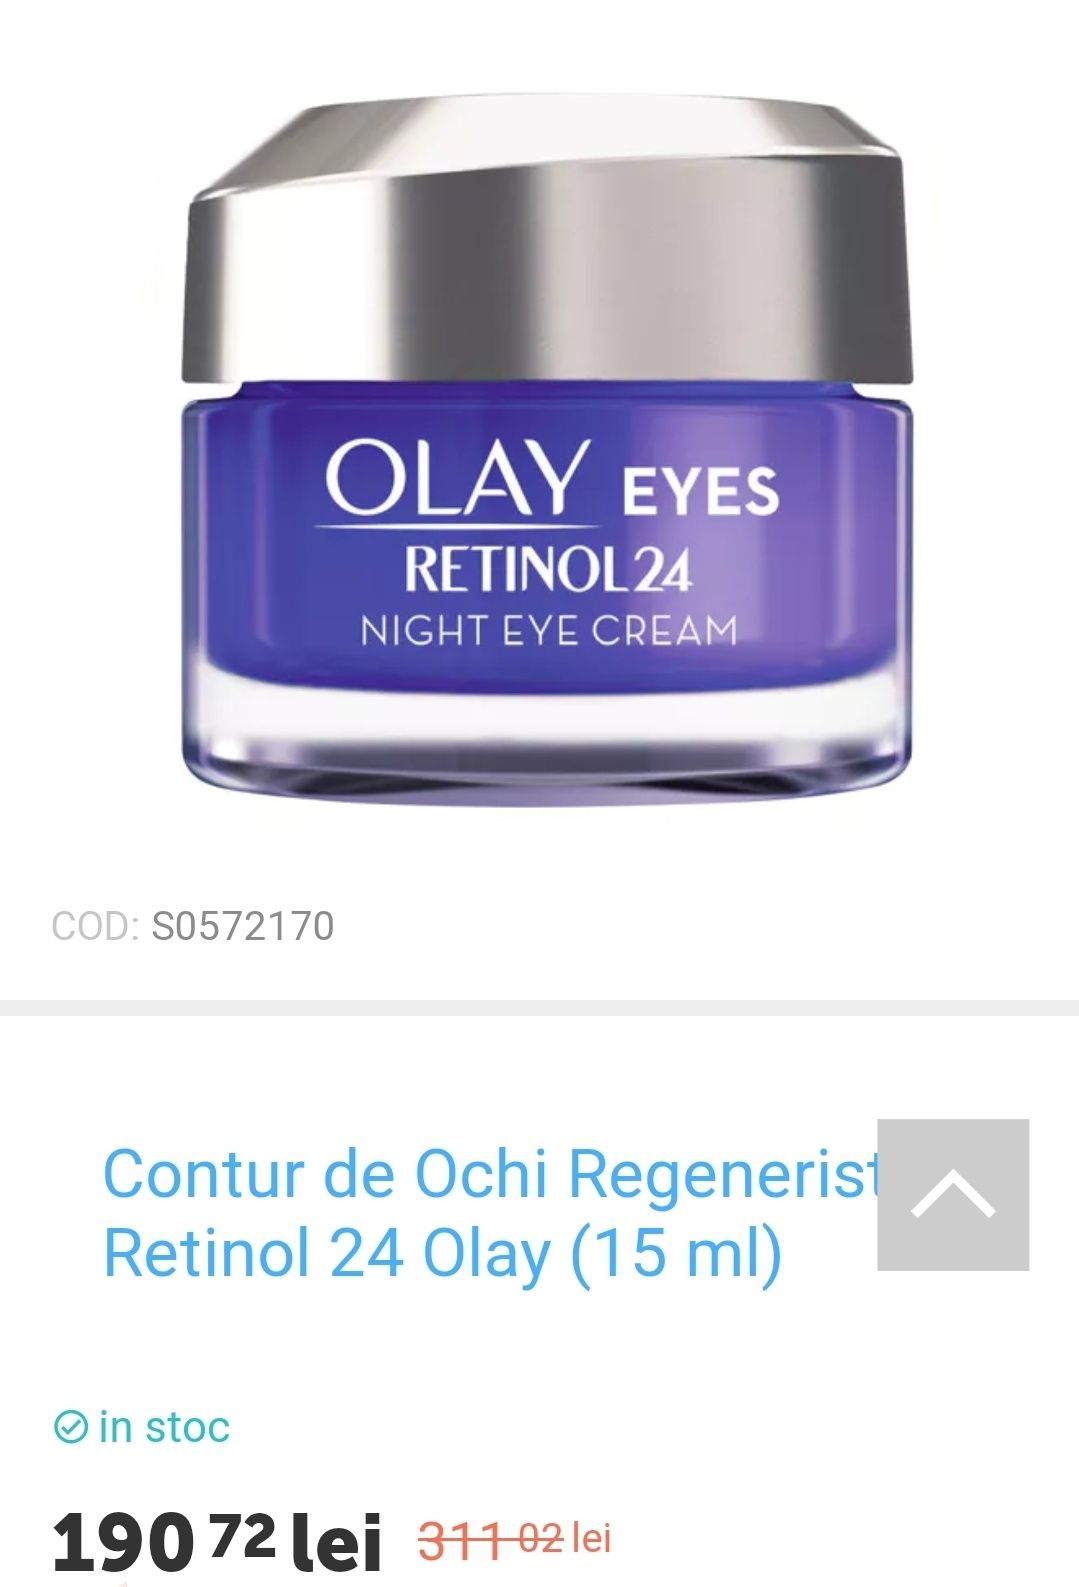 Olay Eyes Retinol 24